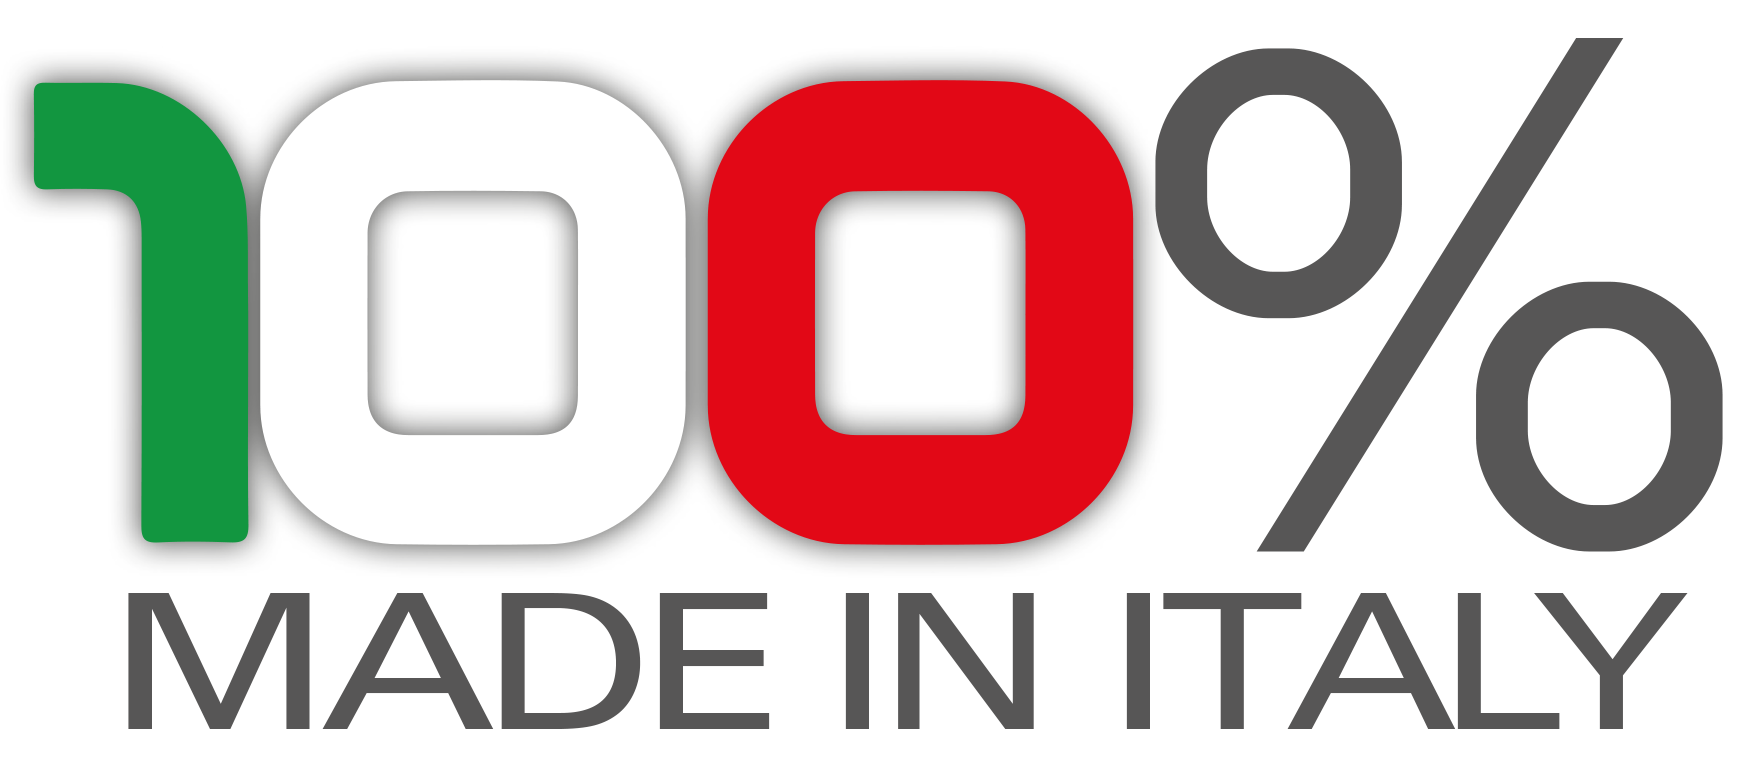 100 Made in italy logo